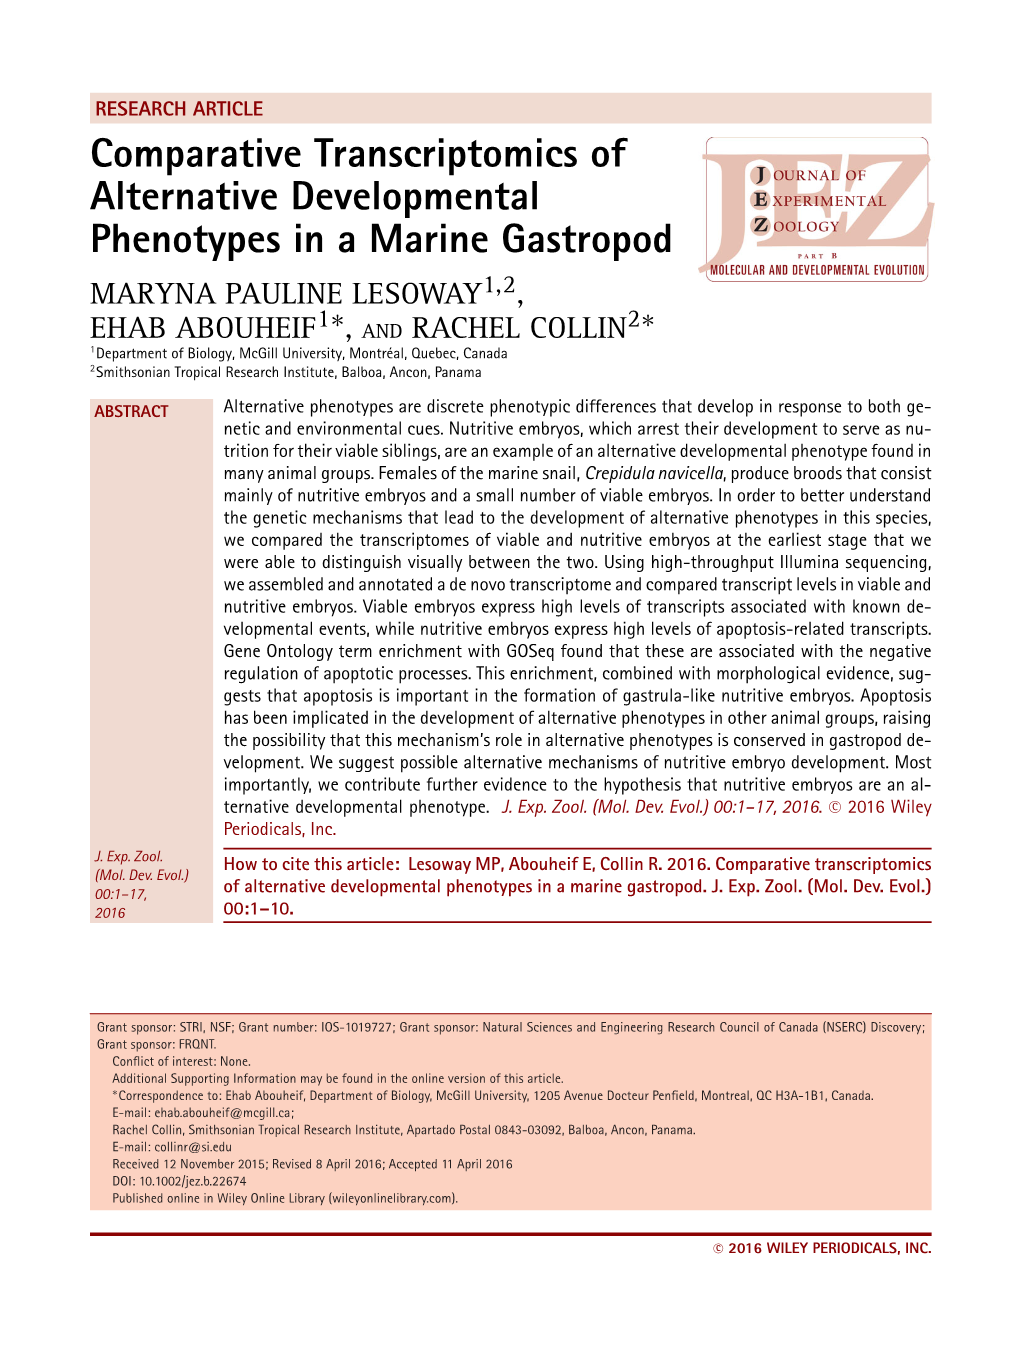 Comparative Transcriptomics of Alternative Developmental